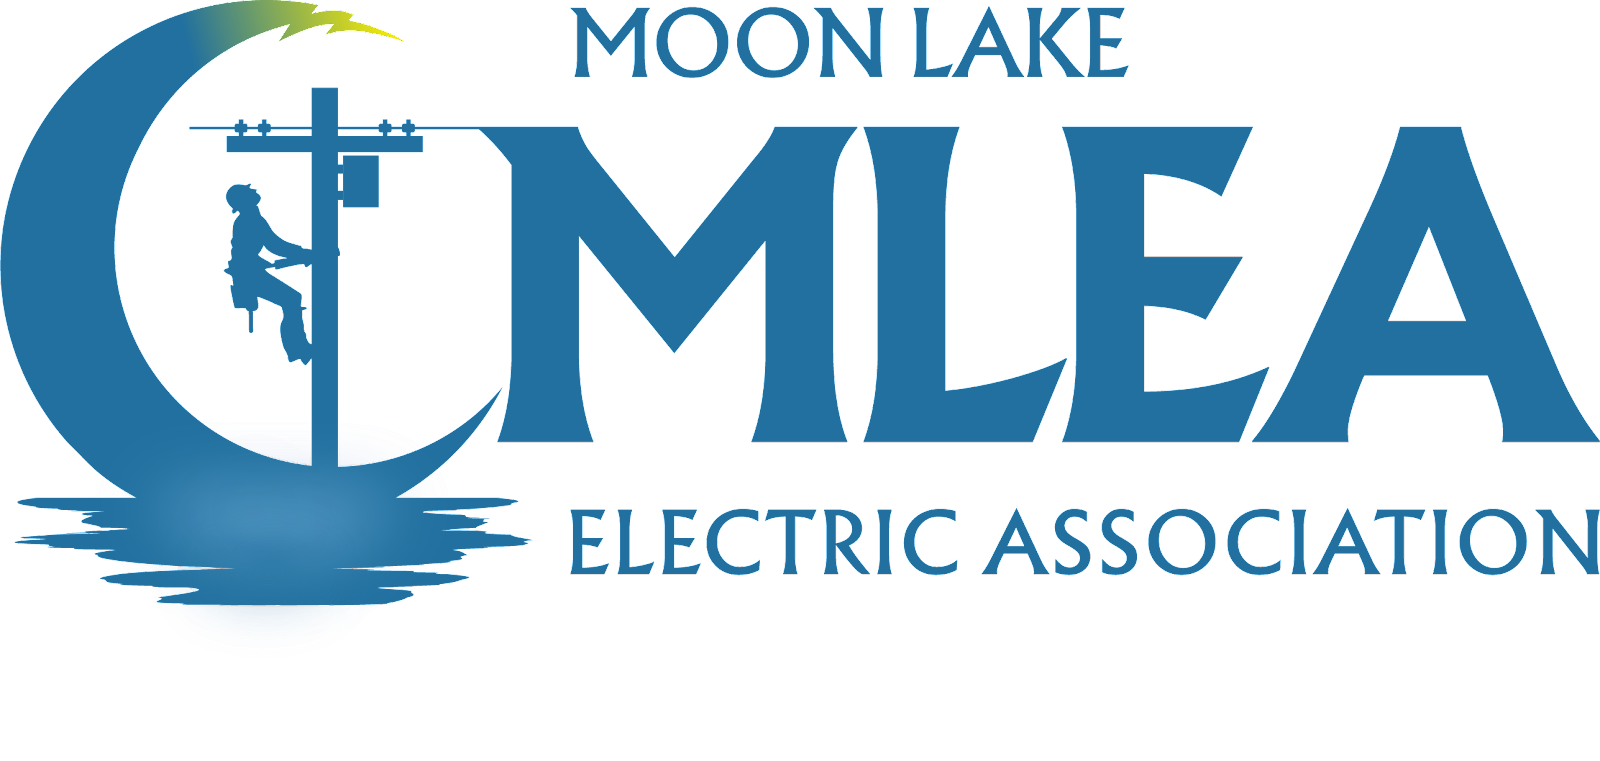 Moon Lake Electric